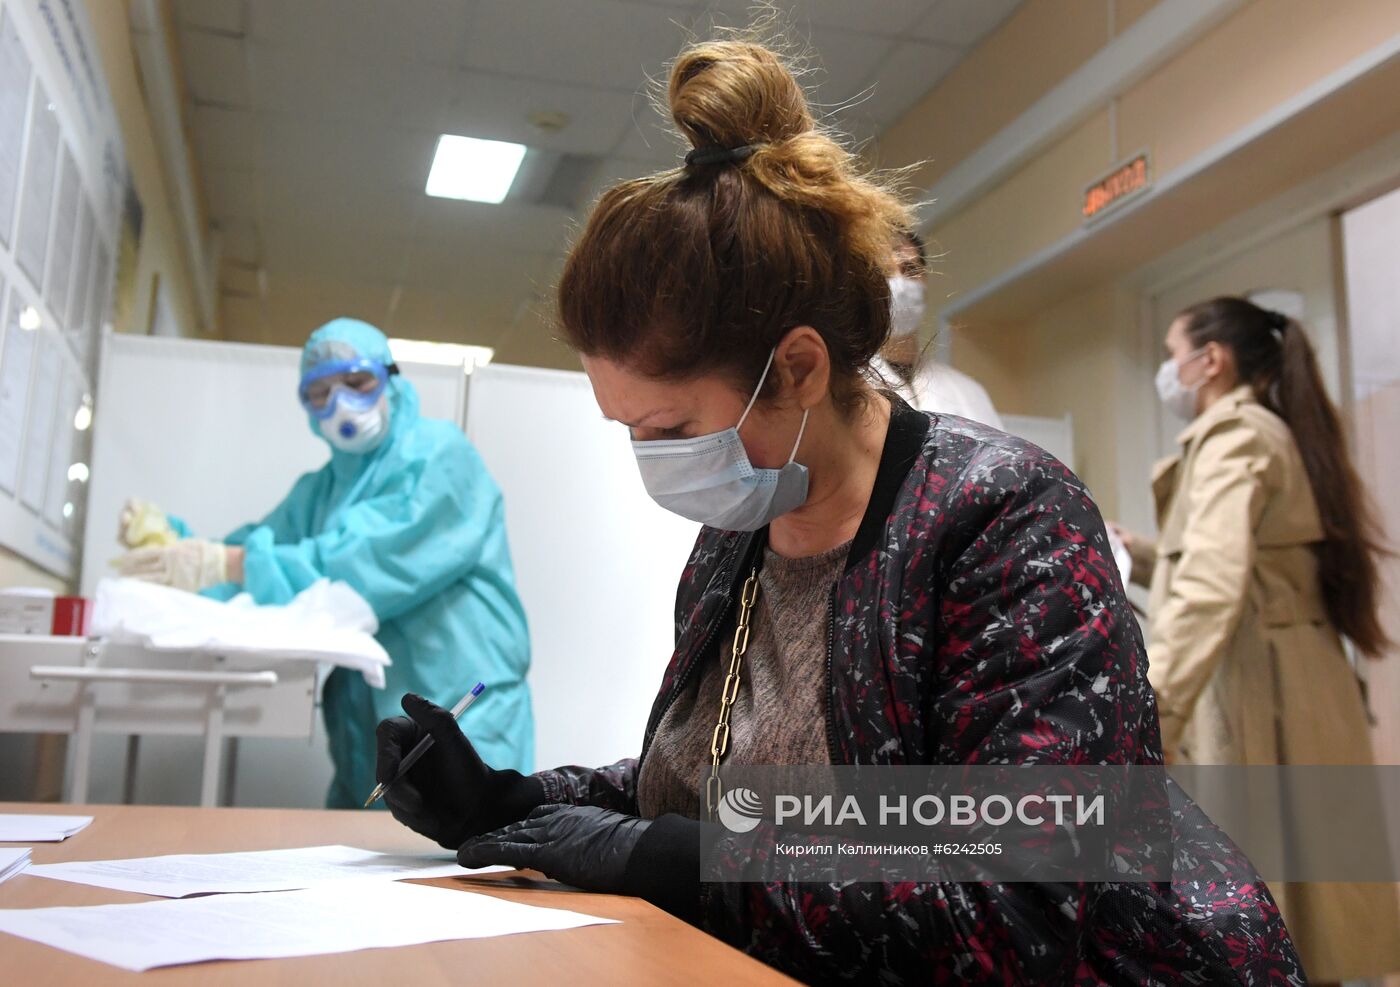 Тестирование россиян на наличие антител к COVID-19 в Москве